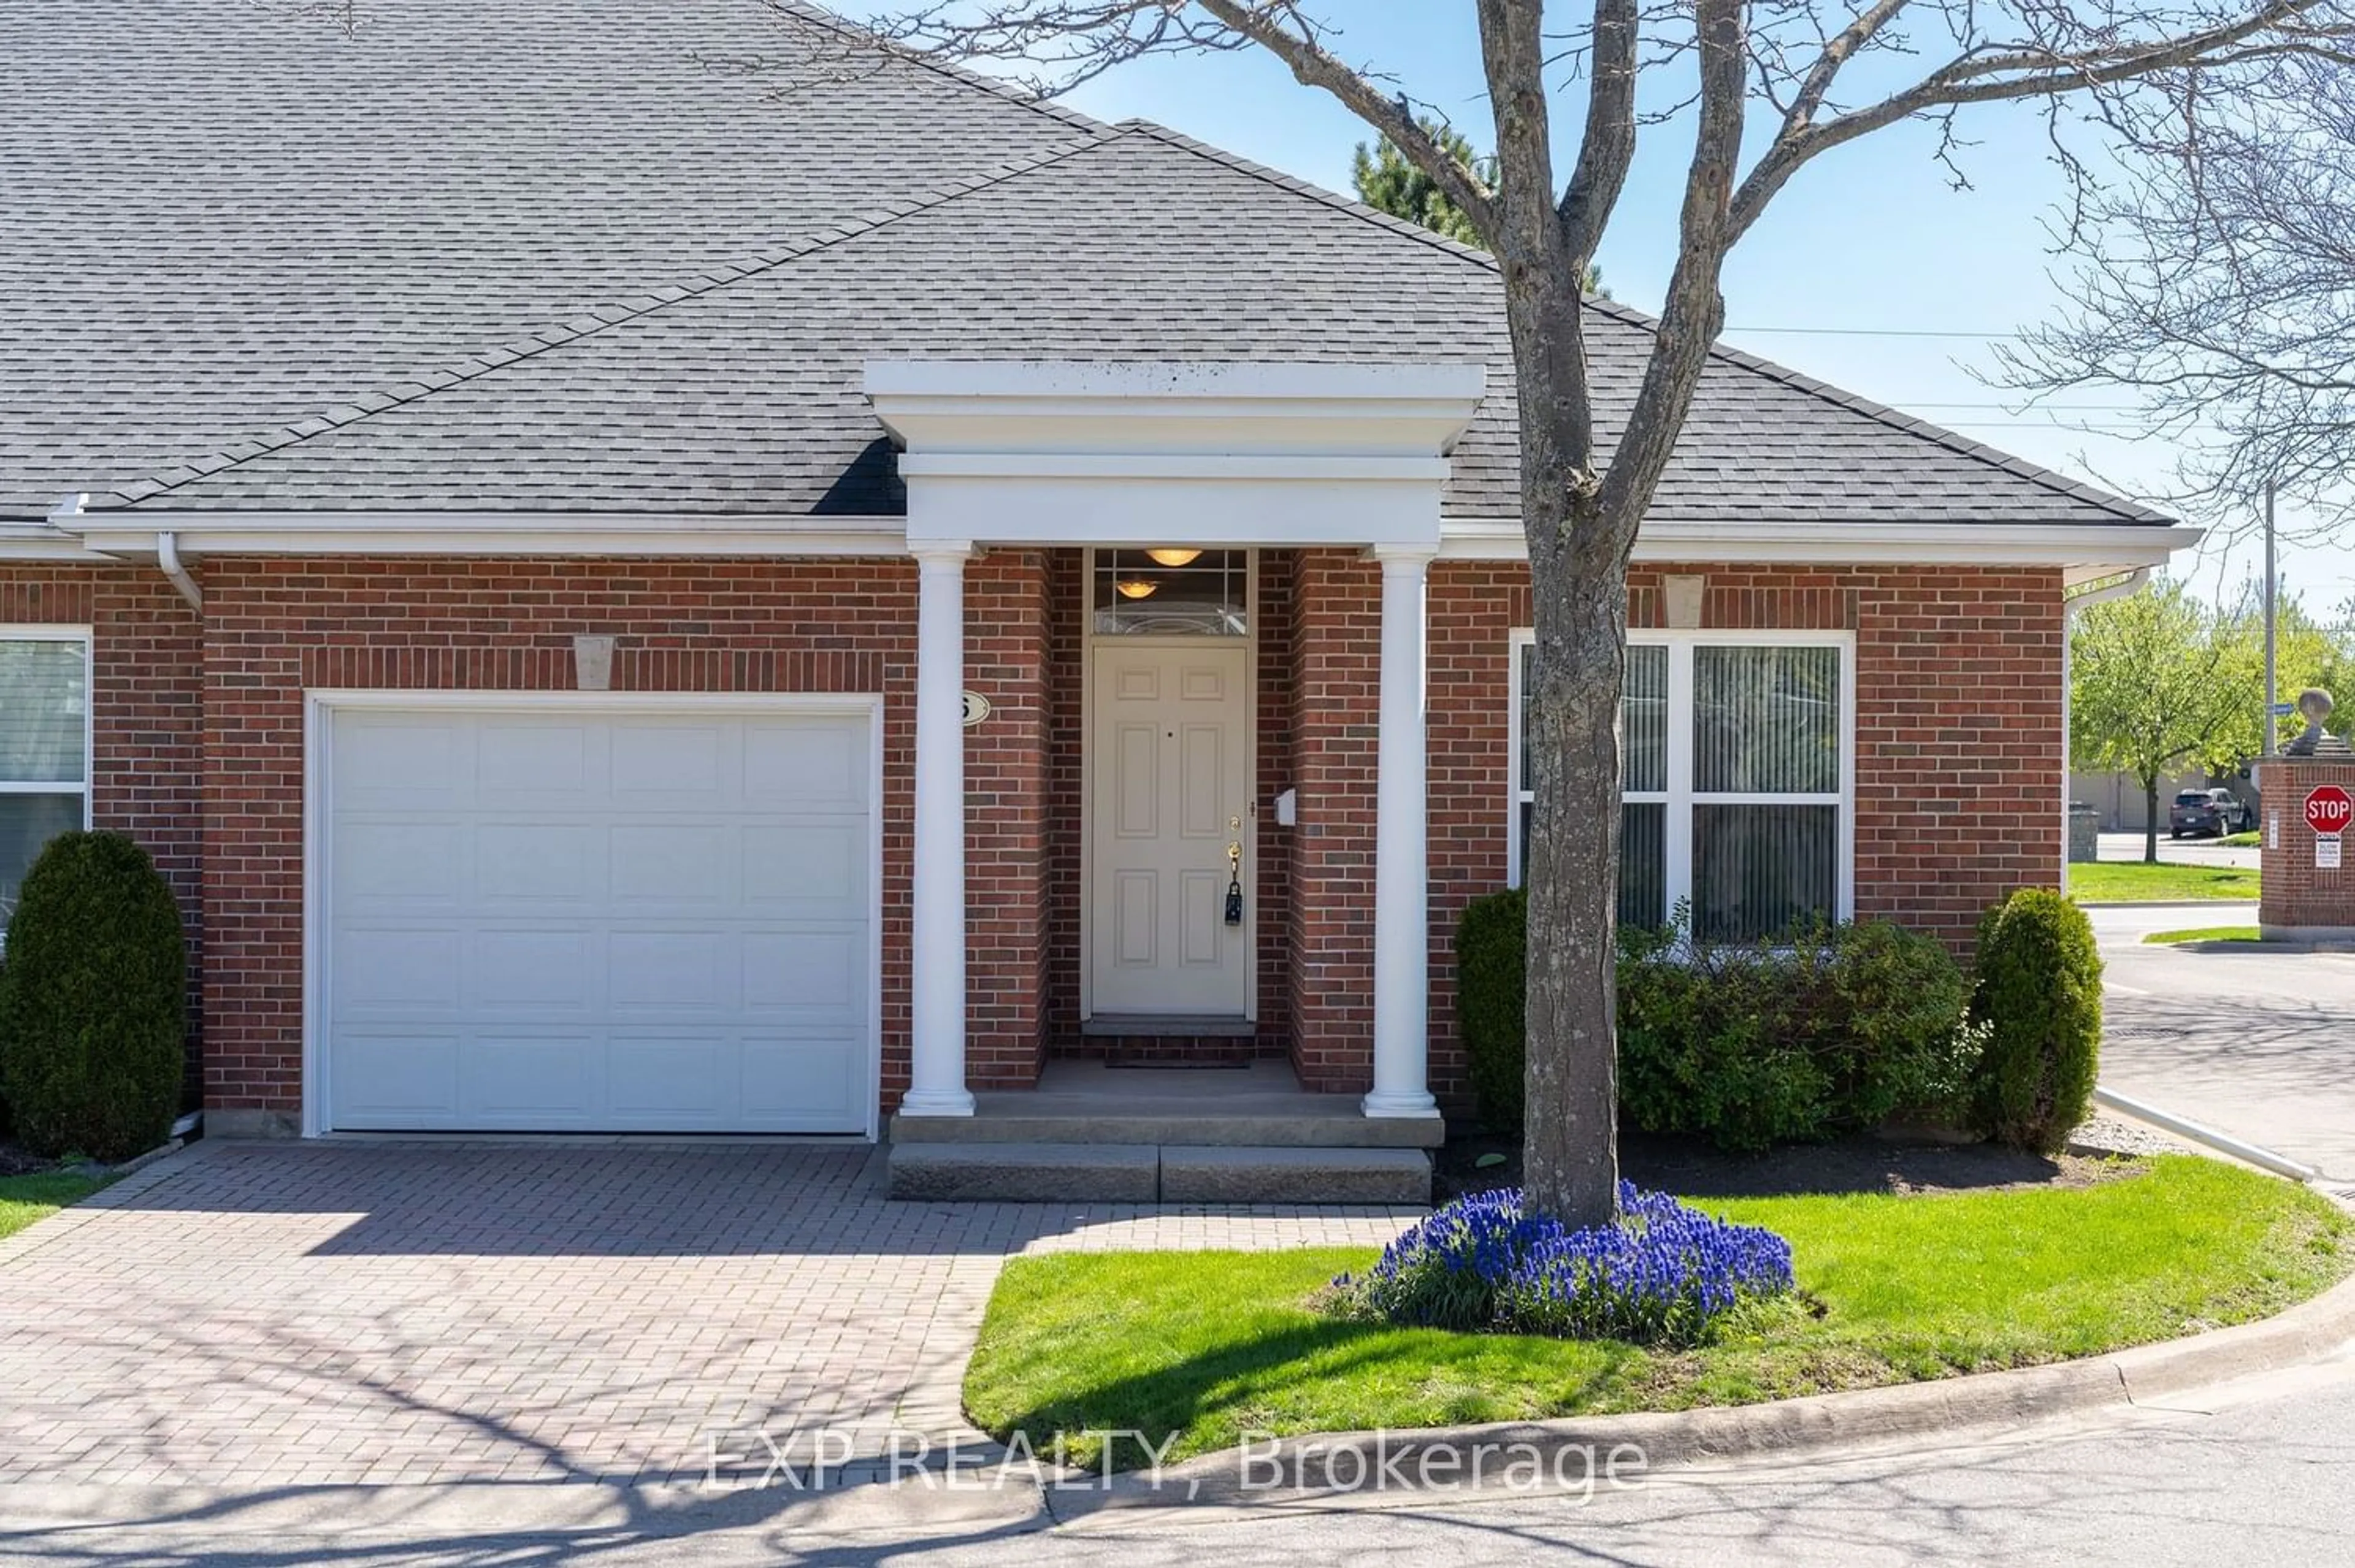 Home with brick exterior material for 3381 Montrose Rd #6, Niagara Falls Ontario L2H 0J9